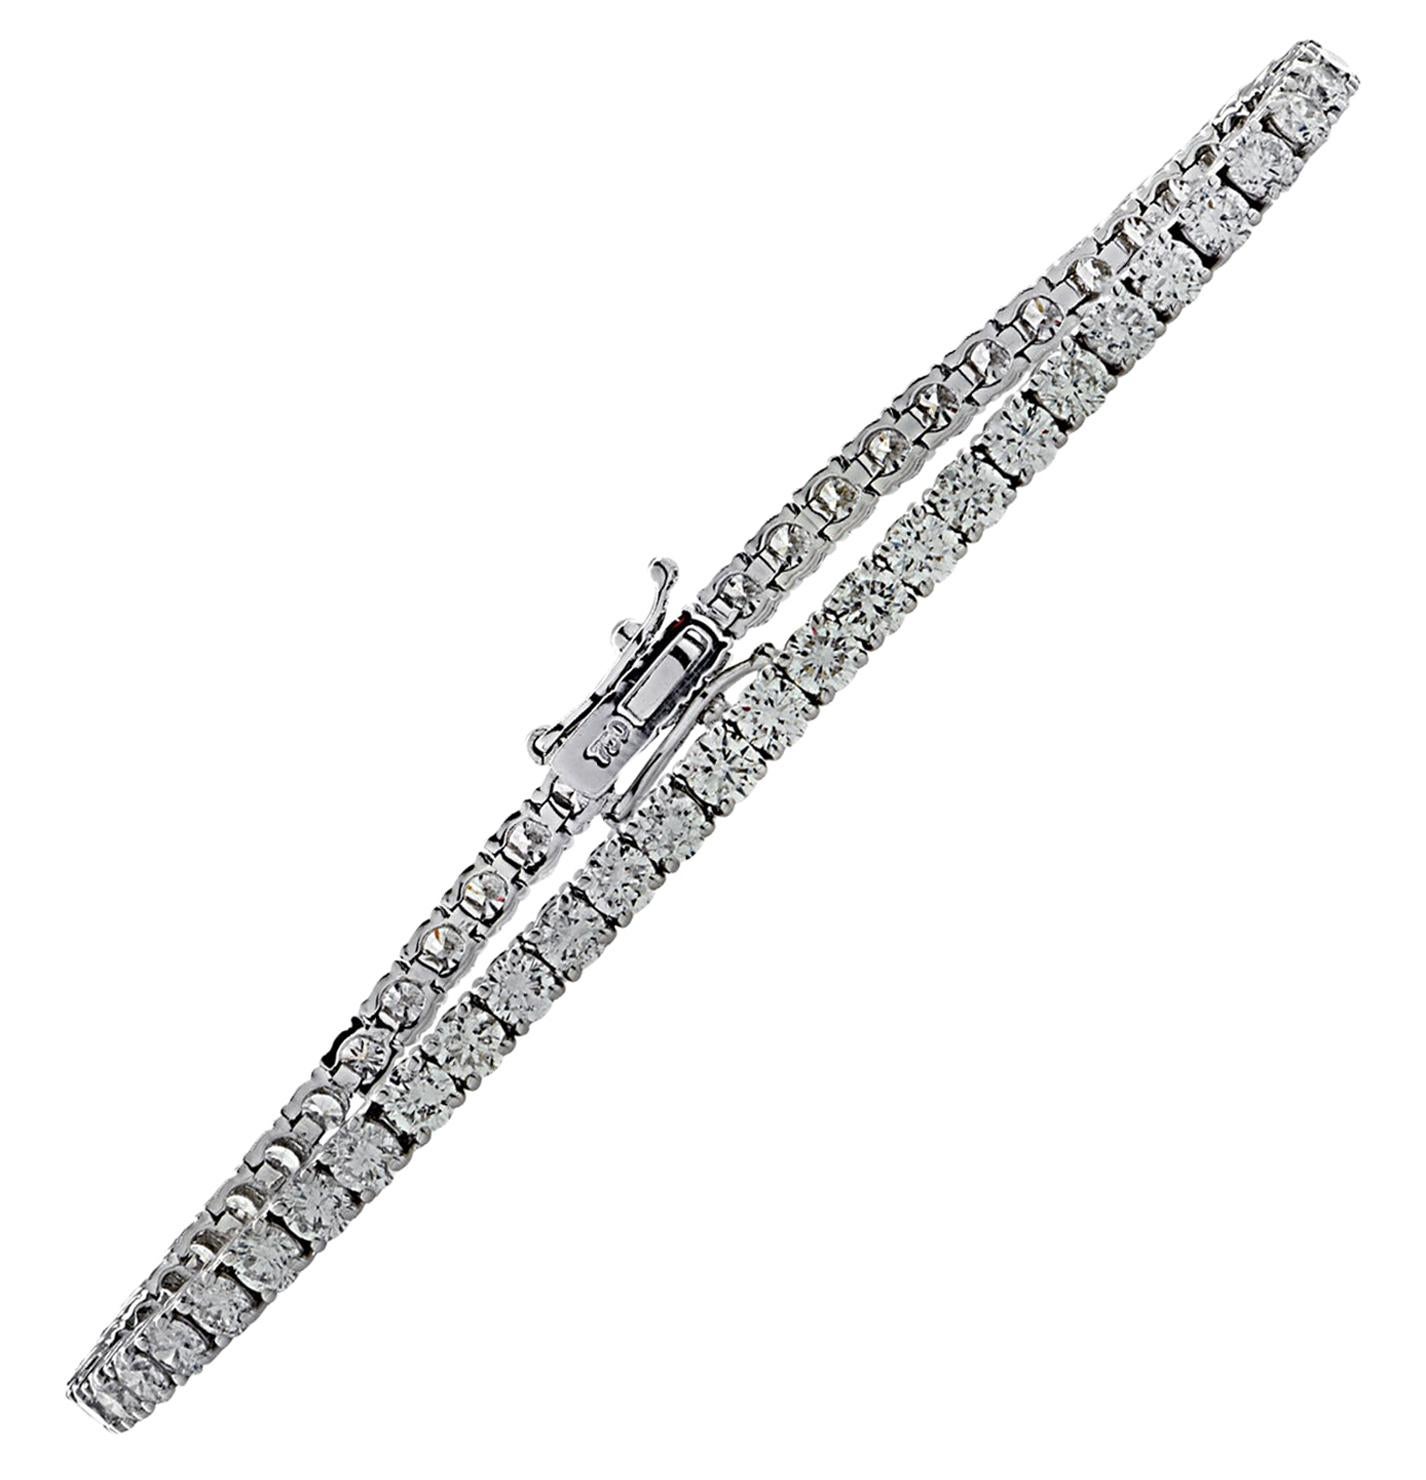 Vivid Diamonds 3.08 Carat Diamond Tennis Bracelet For Sale